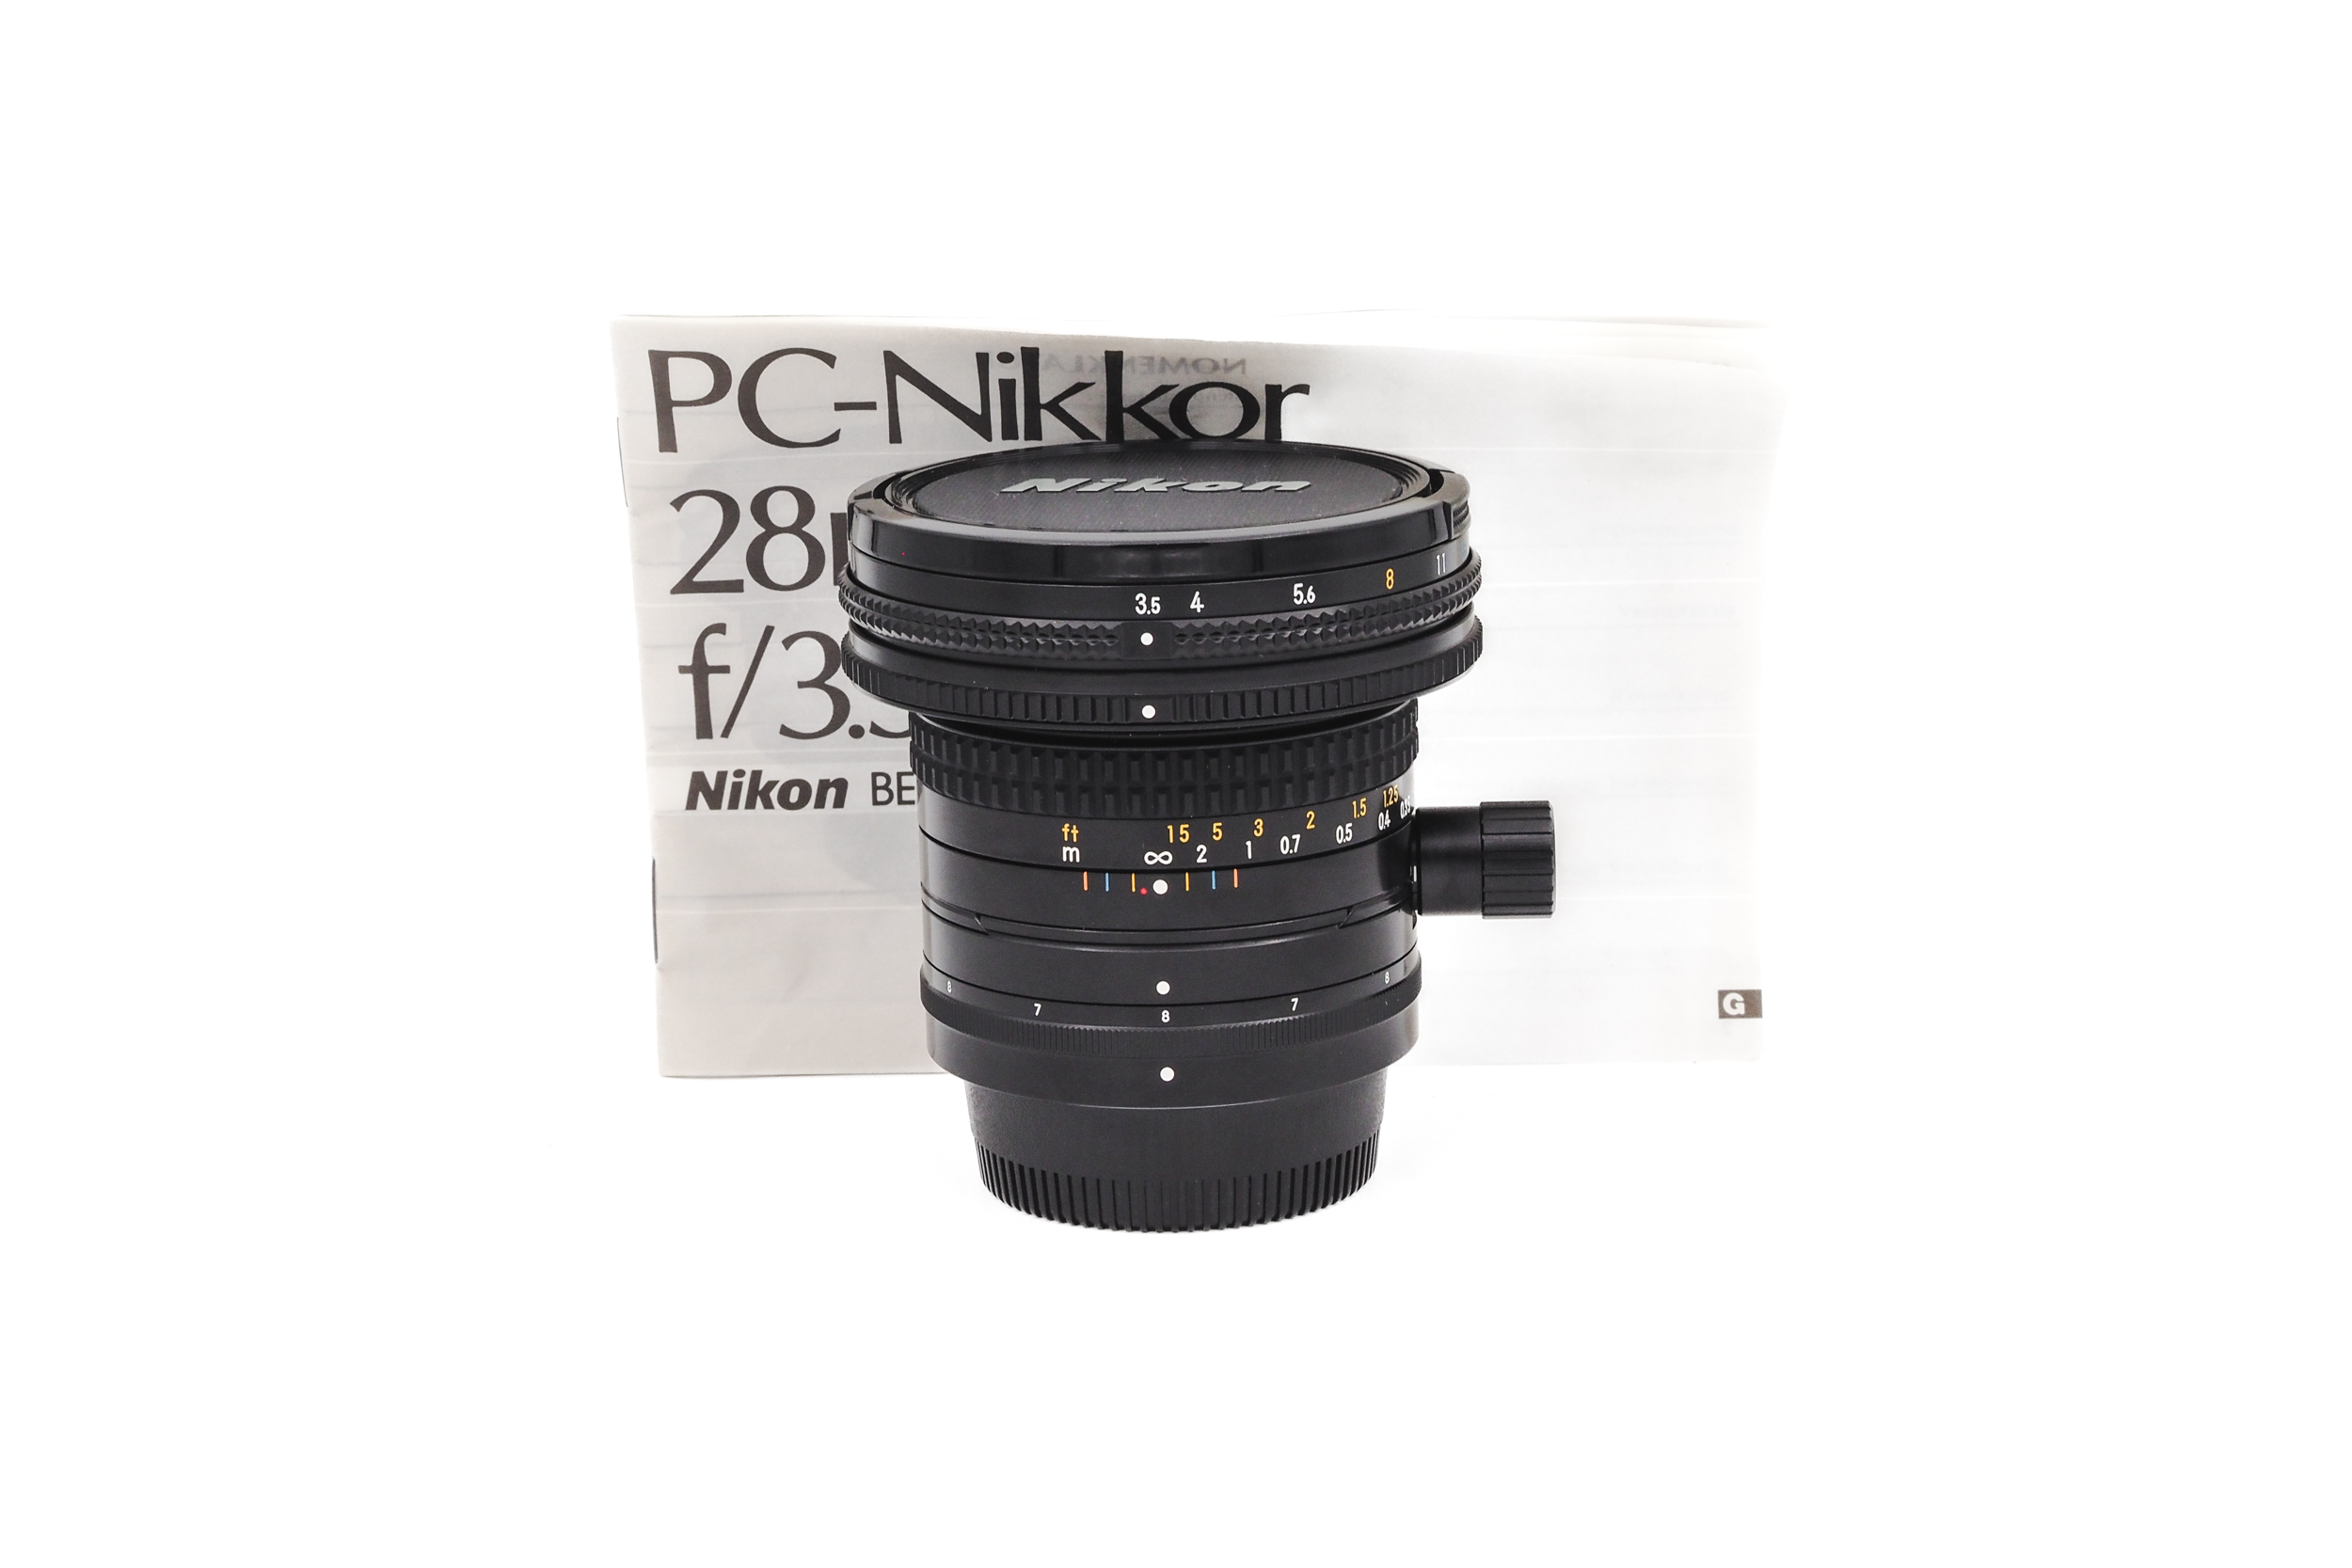 Nikon 28mm f/3.5 PC-Nikkor